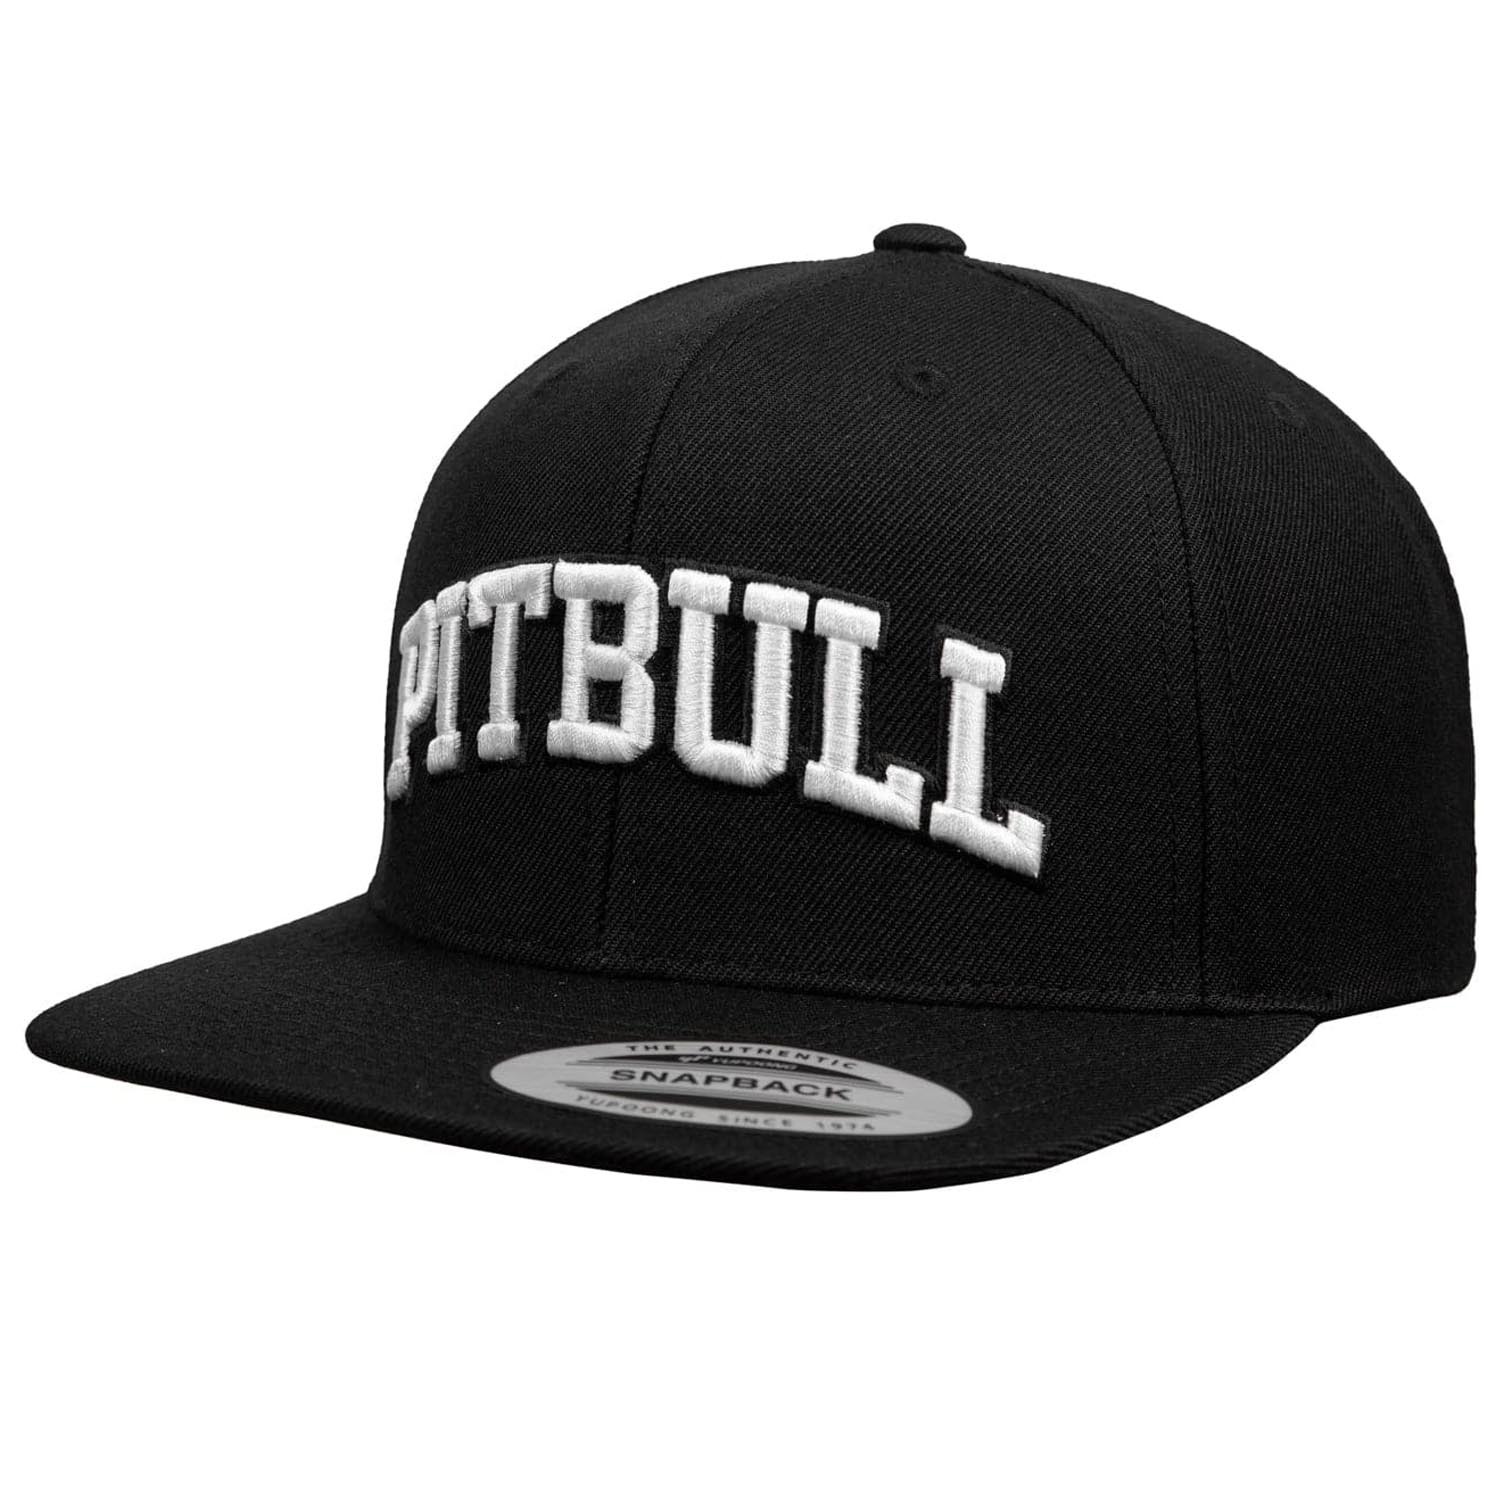 Pit Bull West Coast Snapback Cap, Pitbull YP Premium, black